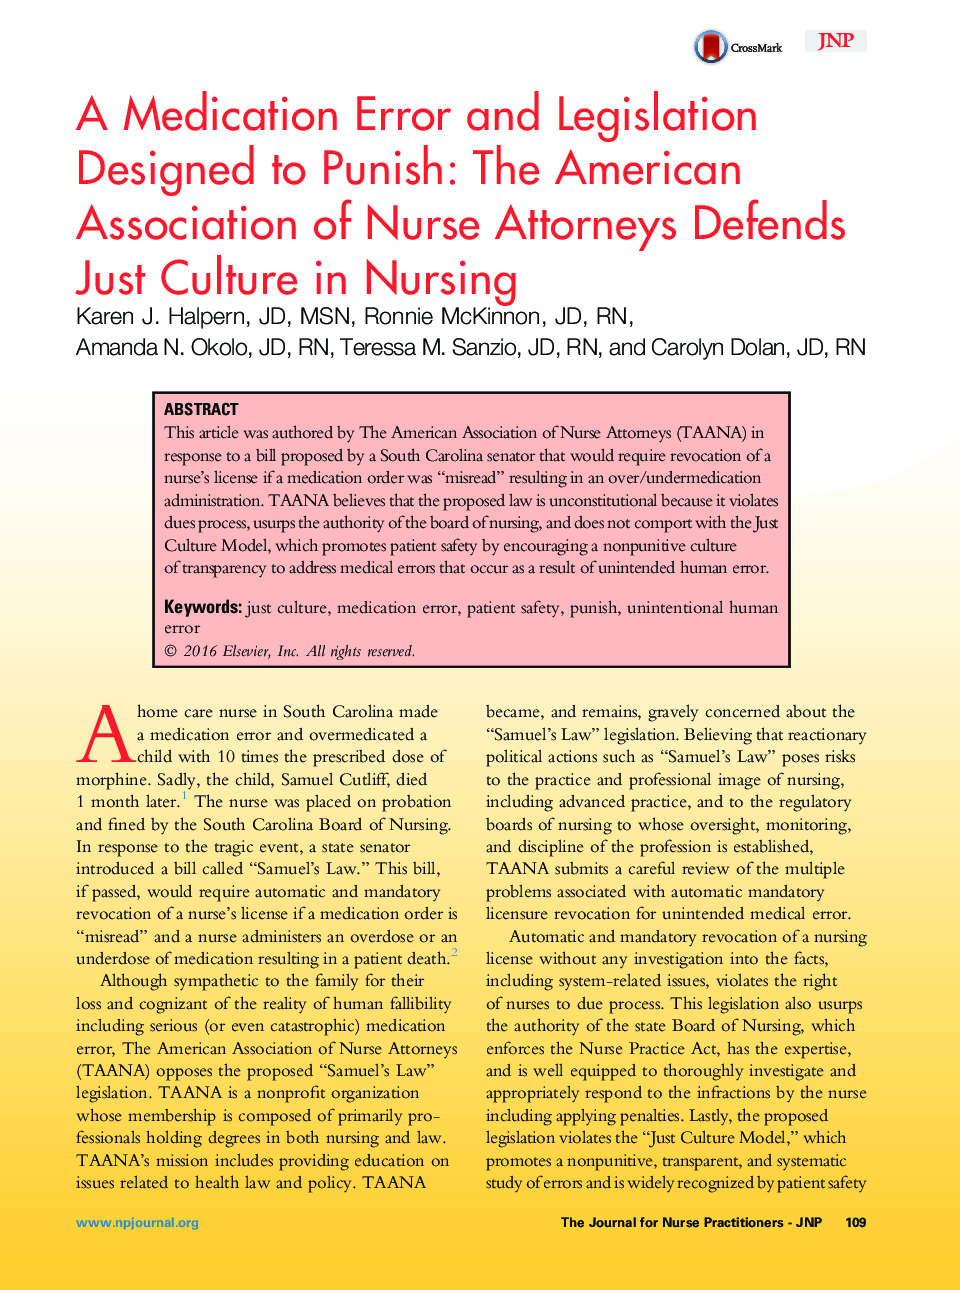 A Medication Error and Legislation Designed to Punish: The American Association of Nurse Attorneys Defends Just Culture in Nursing 